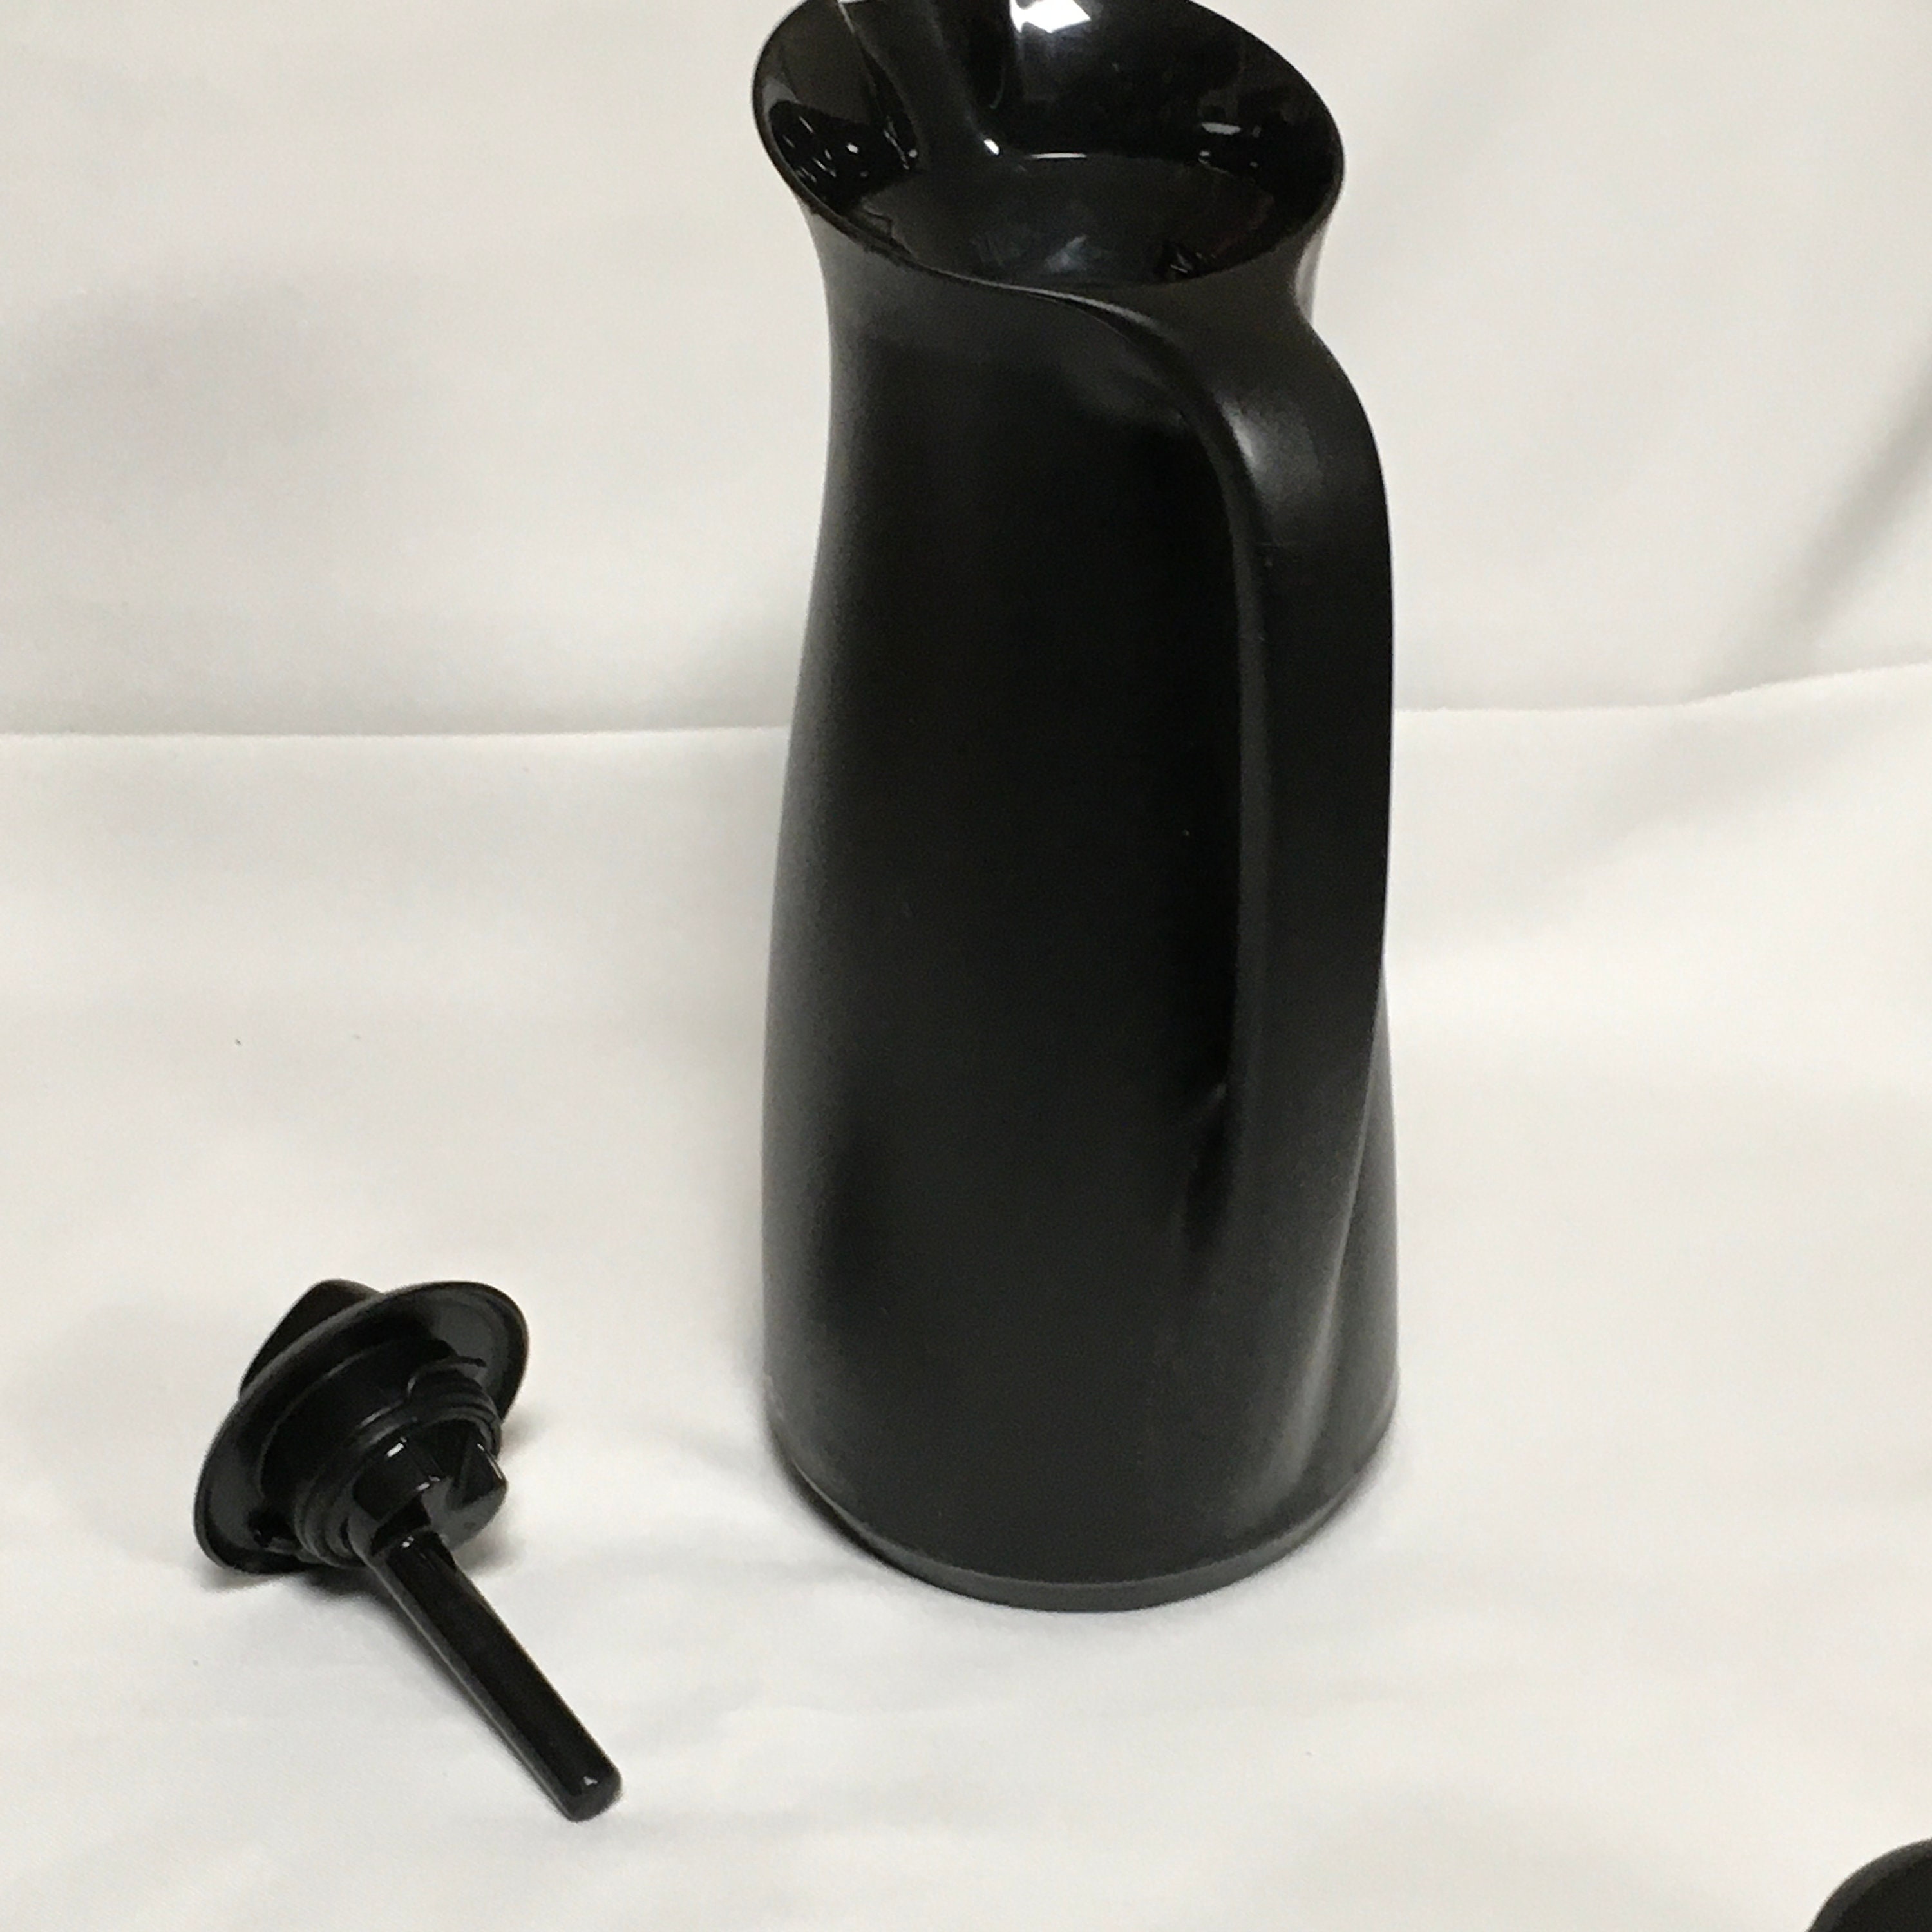 Tupperware Thermos Vacuum Flask Thermo Tup Jug 1 Liter